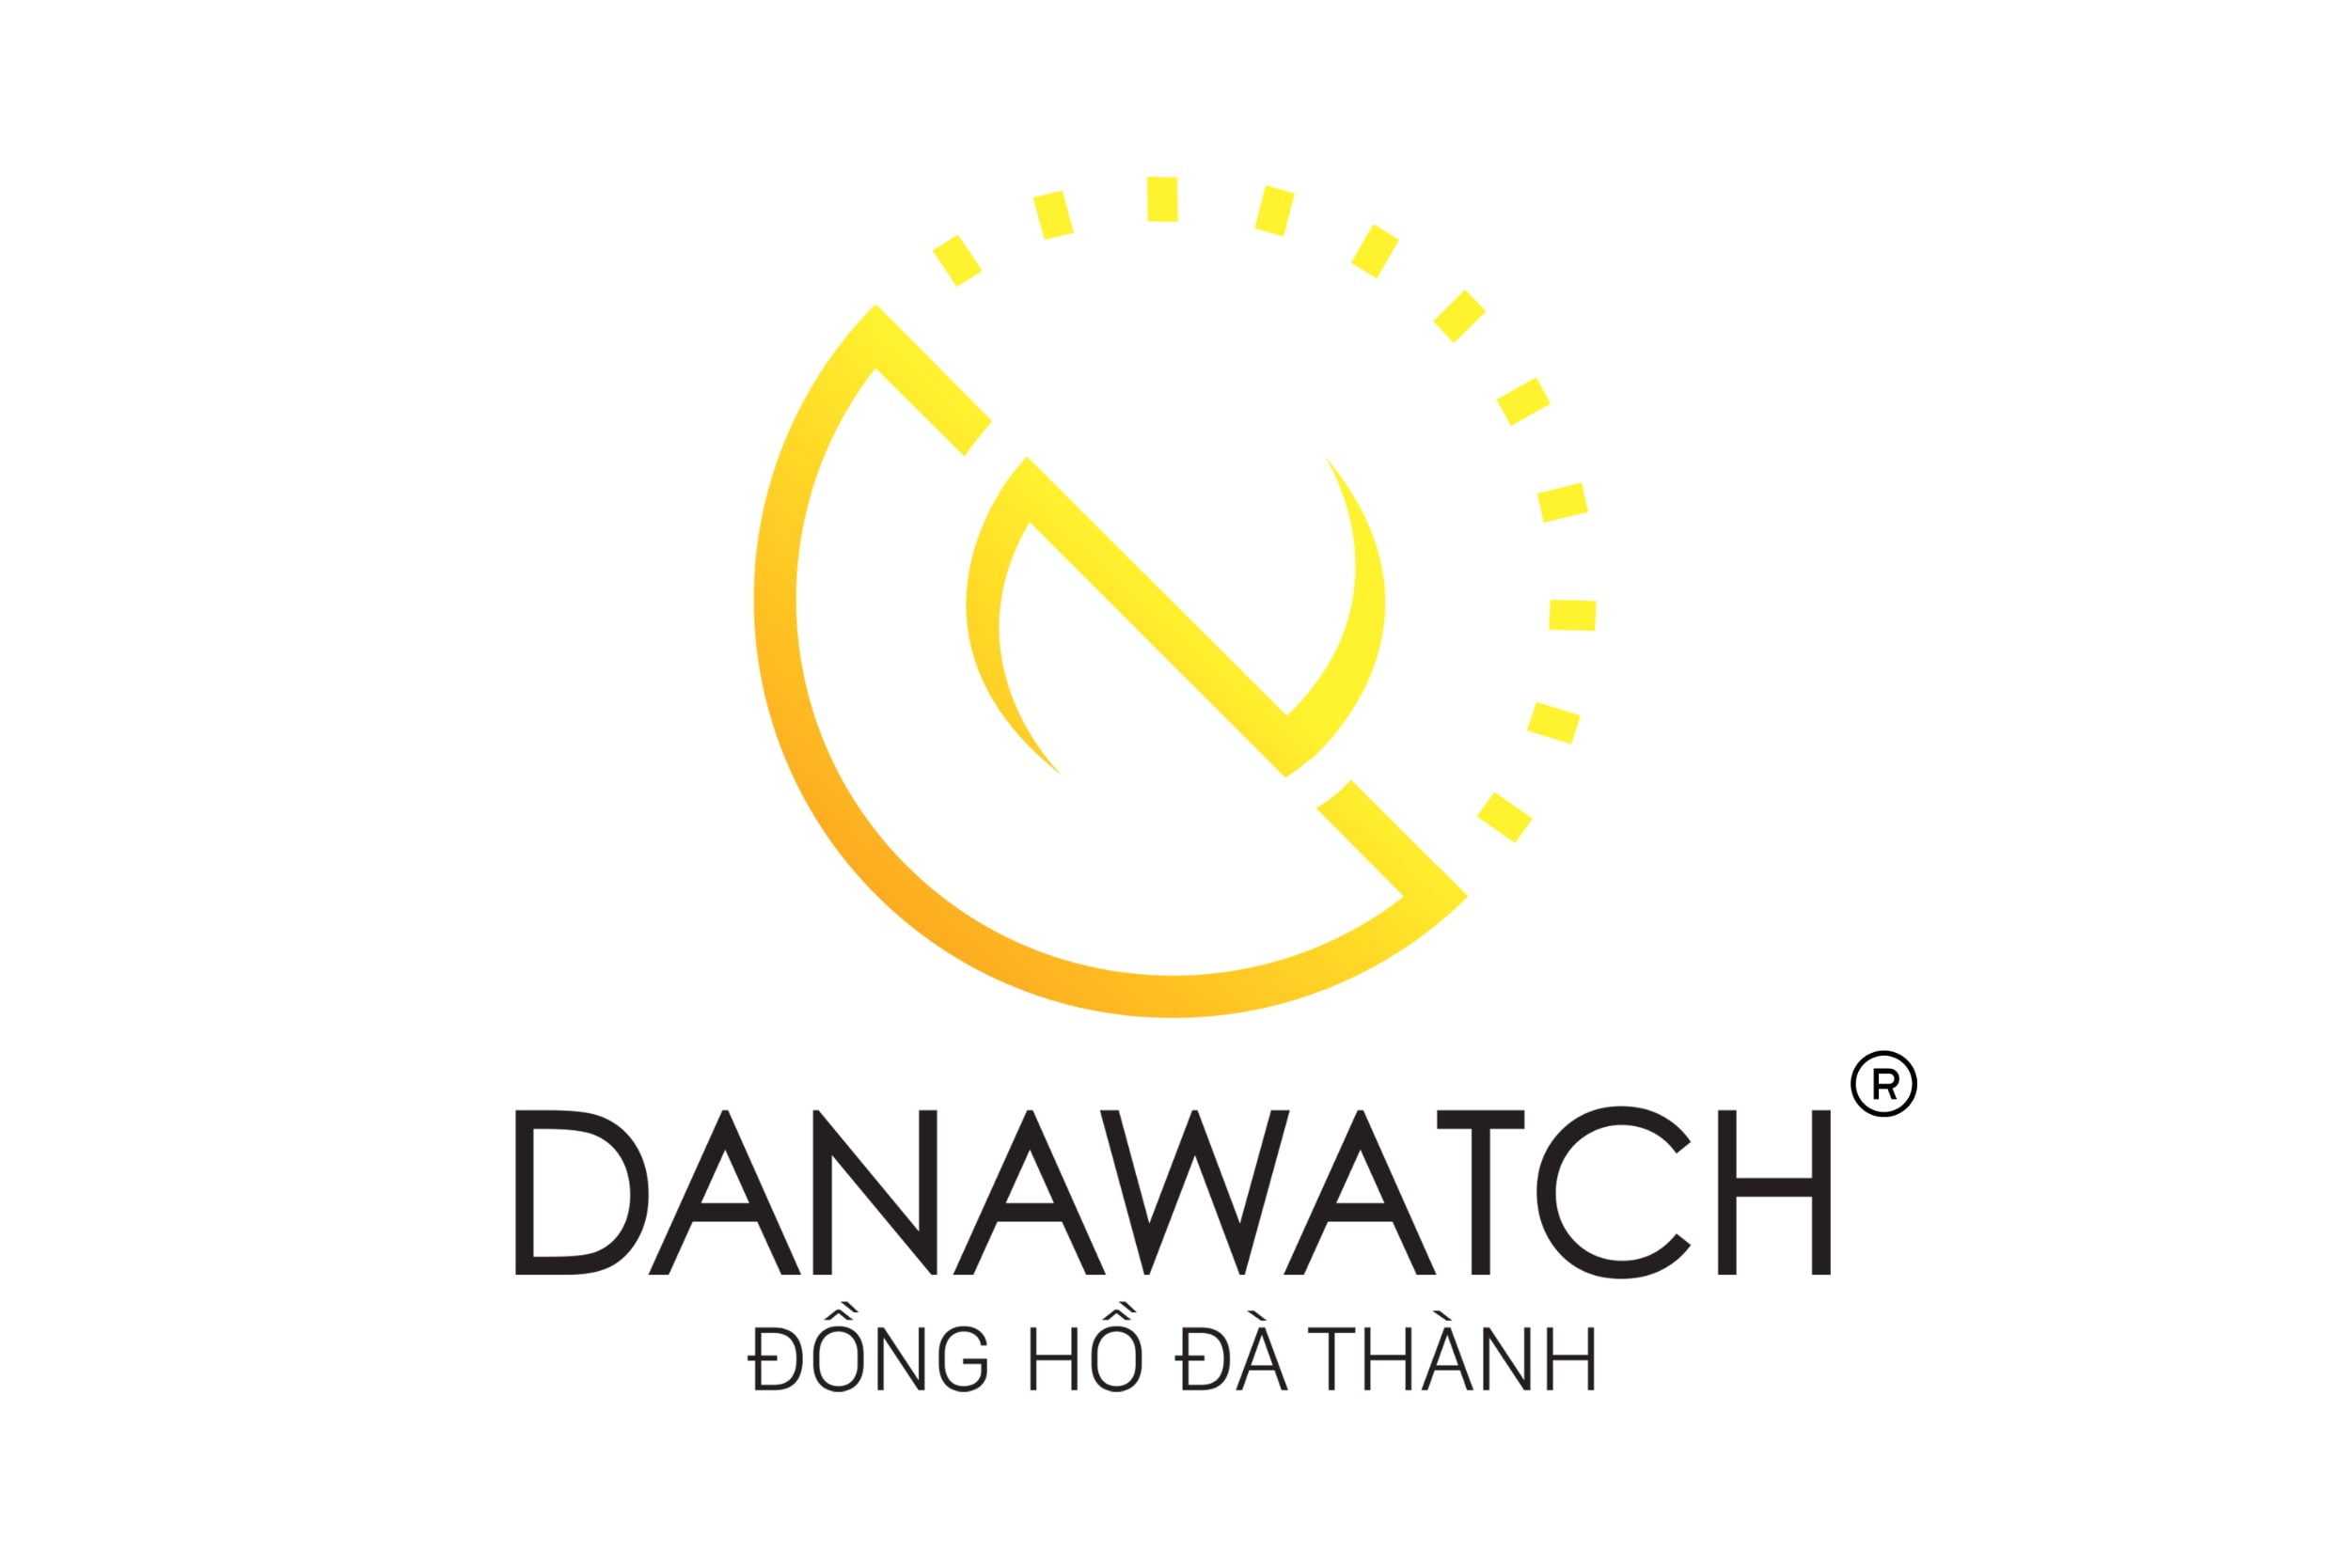 Dong-ho-da-nang-logo